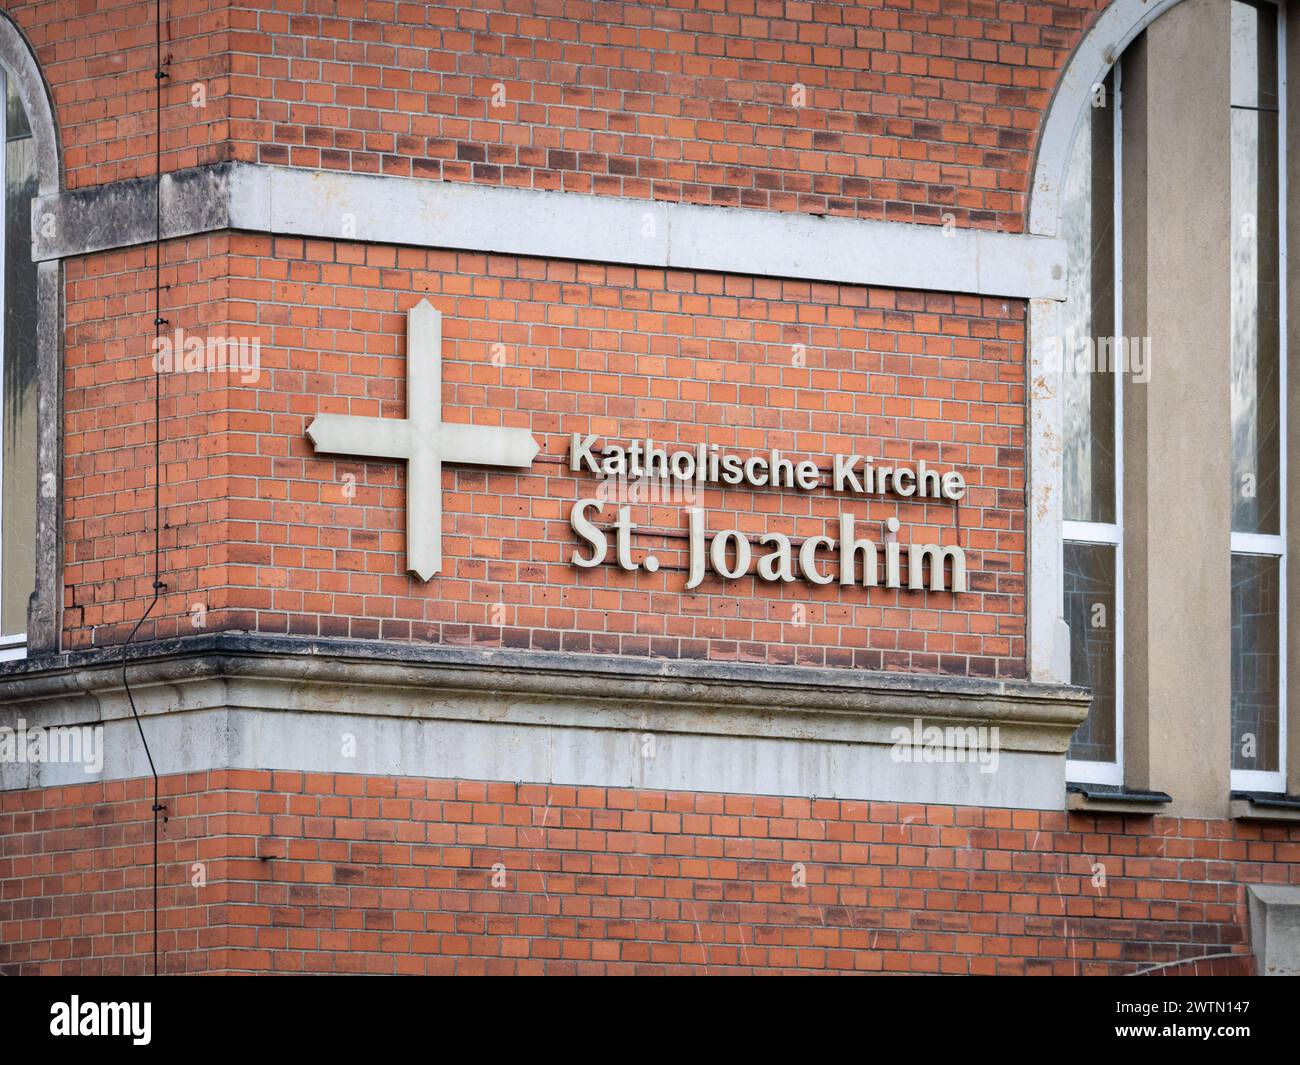 Katholische Kirche St. Joachim (Saint Joachim Catholic Church) logo sign on a building exterior. Christianity is the major religion in Germany. Stock Photo